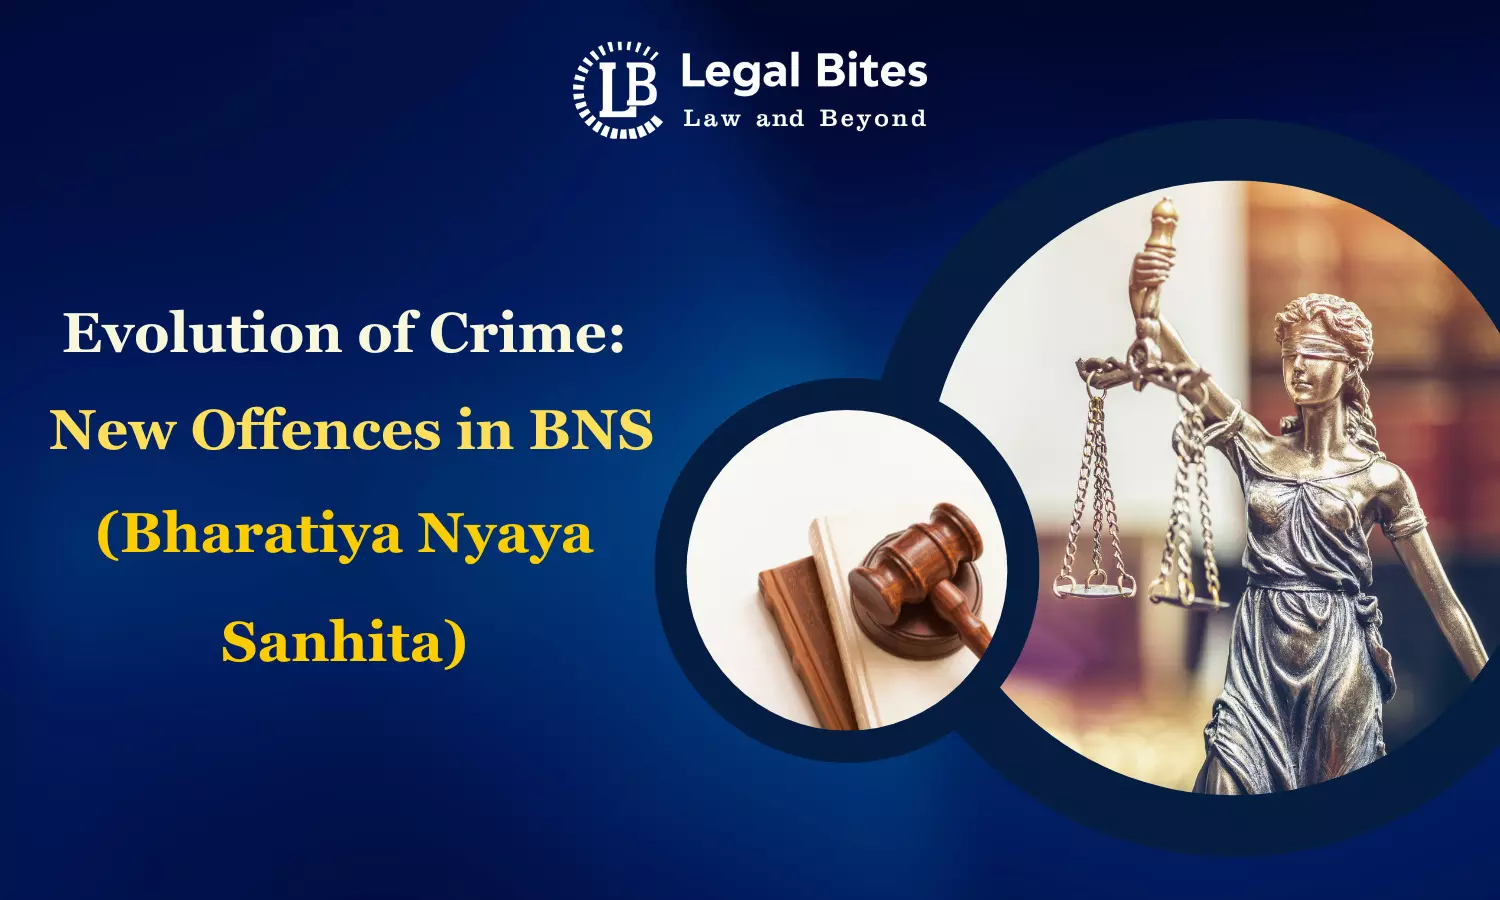 Evolution of Crime: New Offences in Bharatiya Nyaya Sanhita